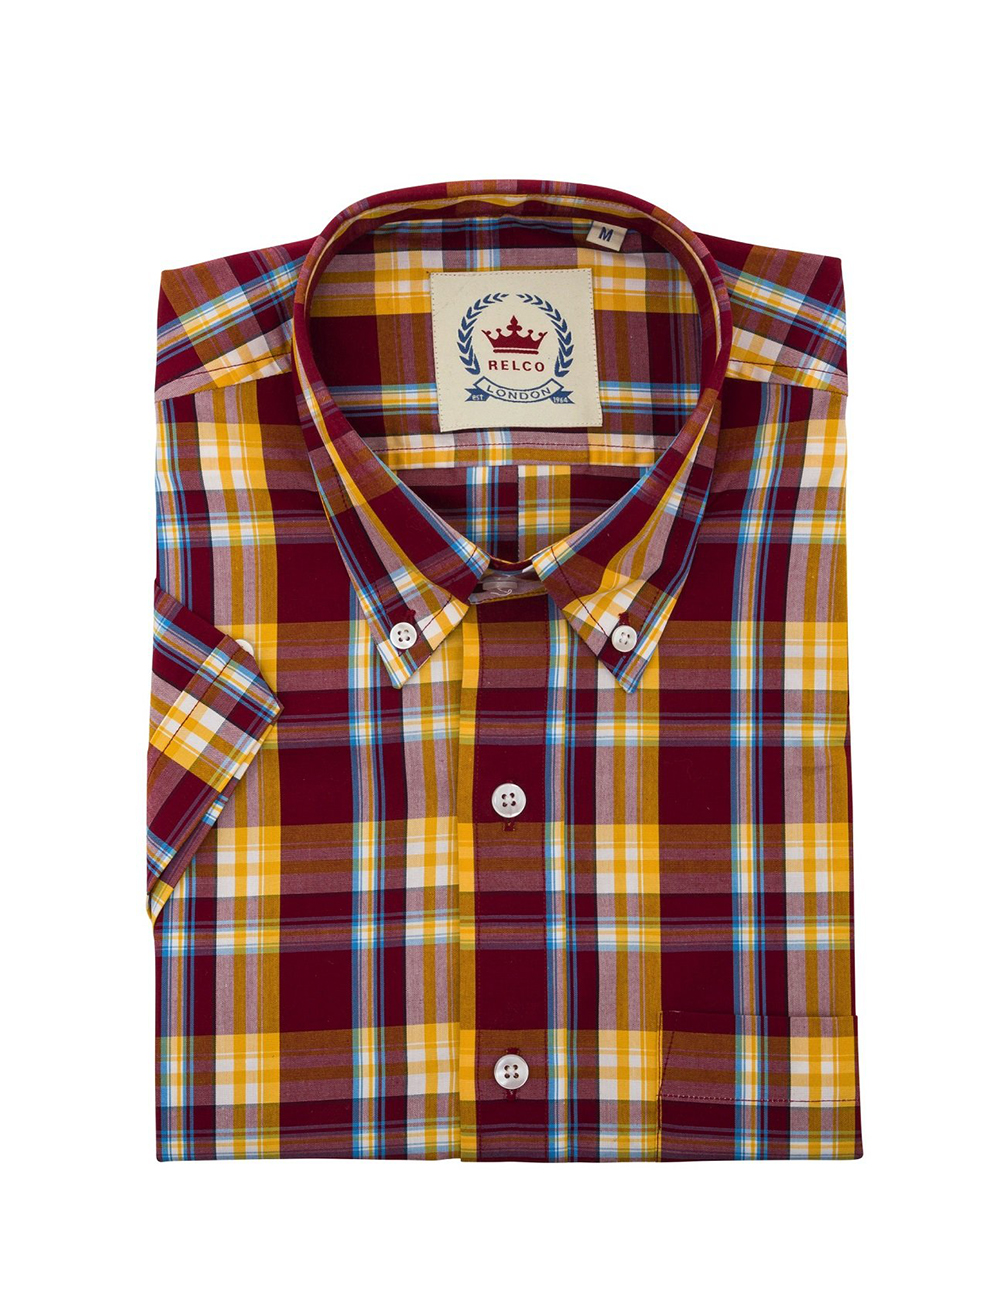 Relco Burgundy Check Short Sleeve Shirt 1